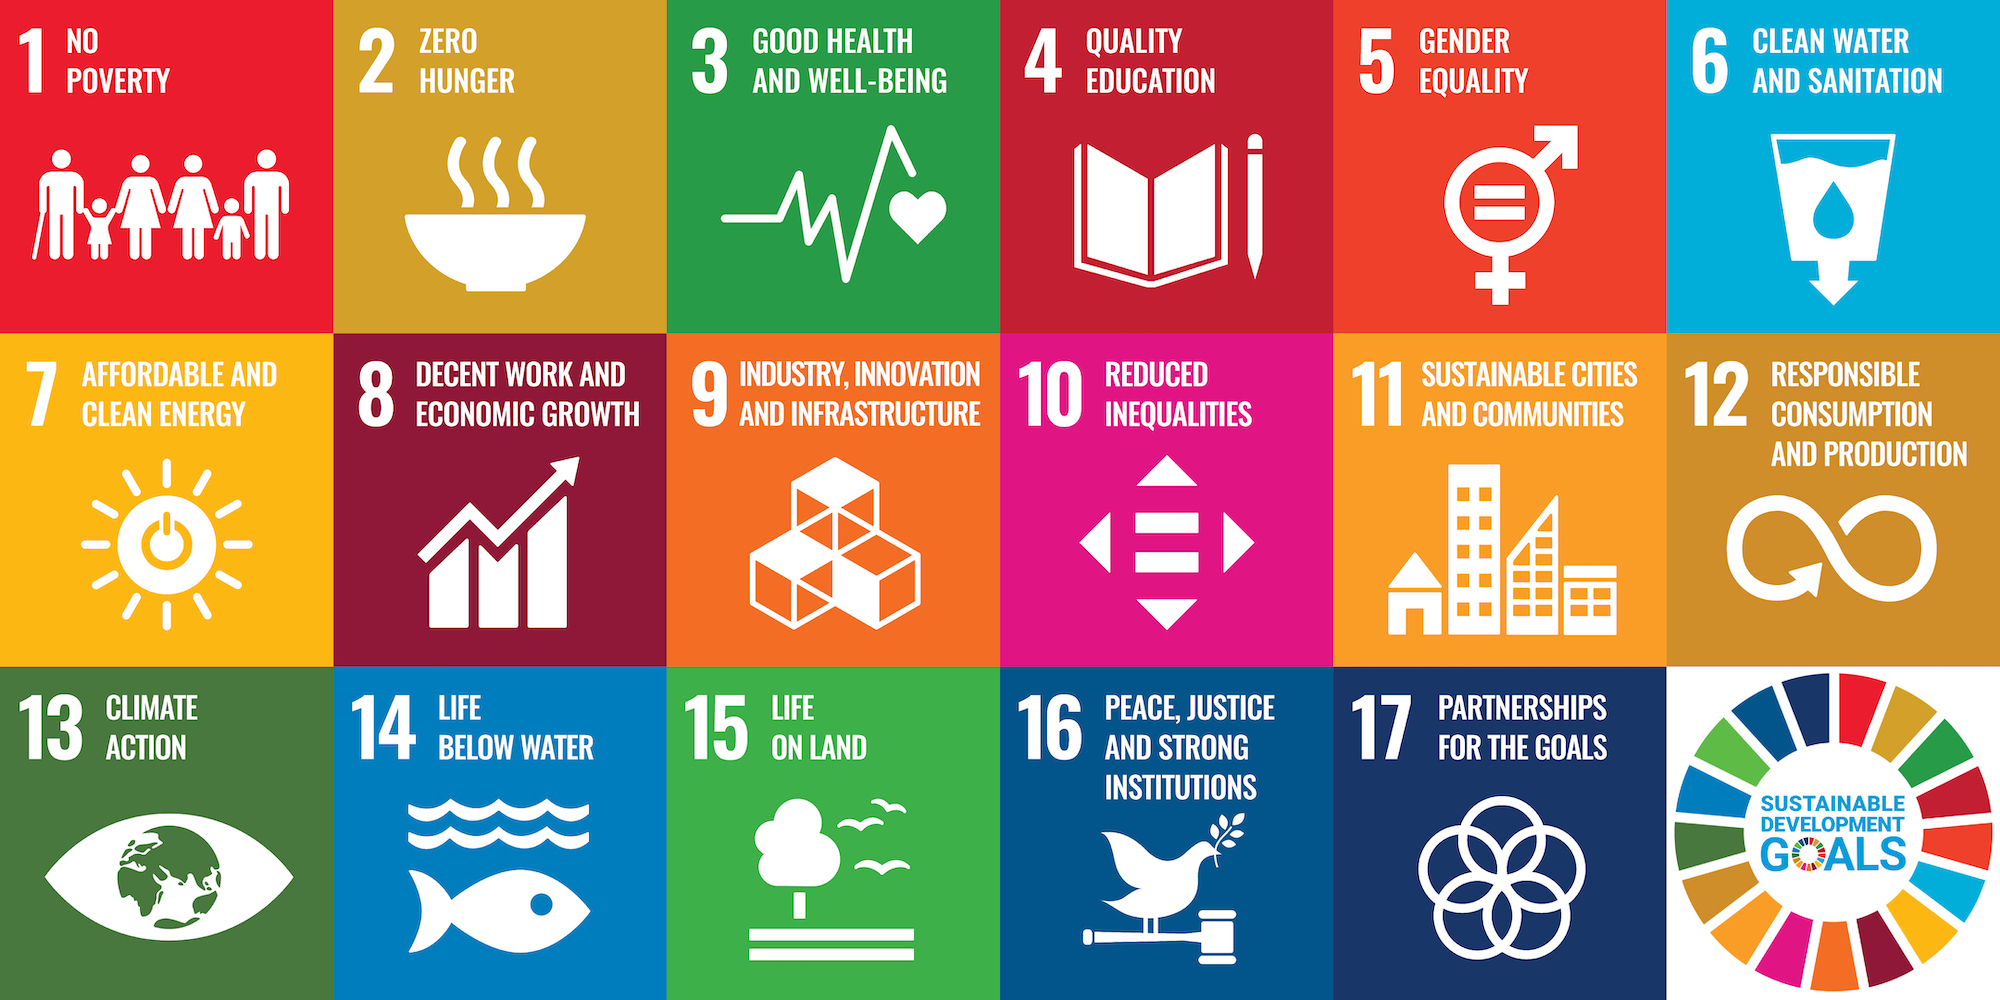 17Sustainable Development Goals -SDGs - United Nations - UN